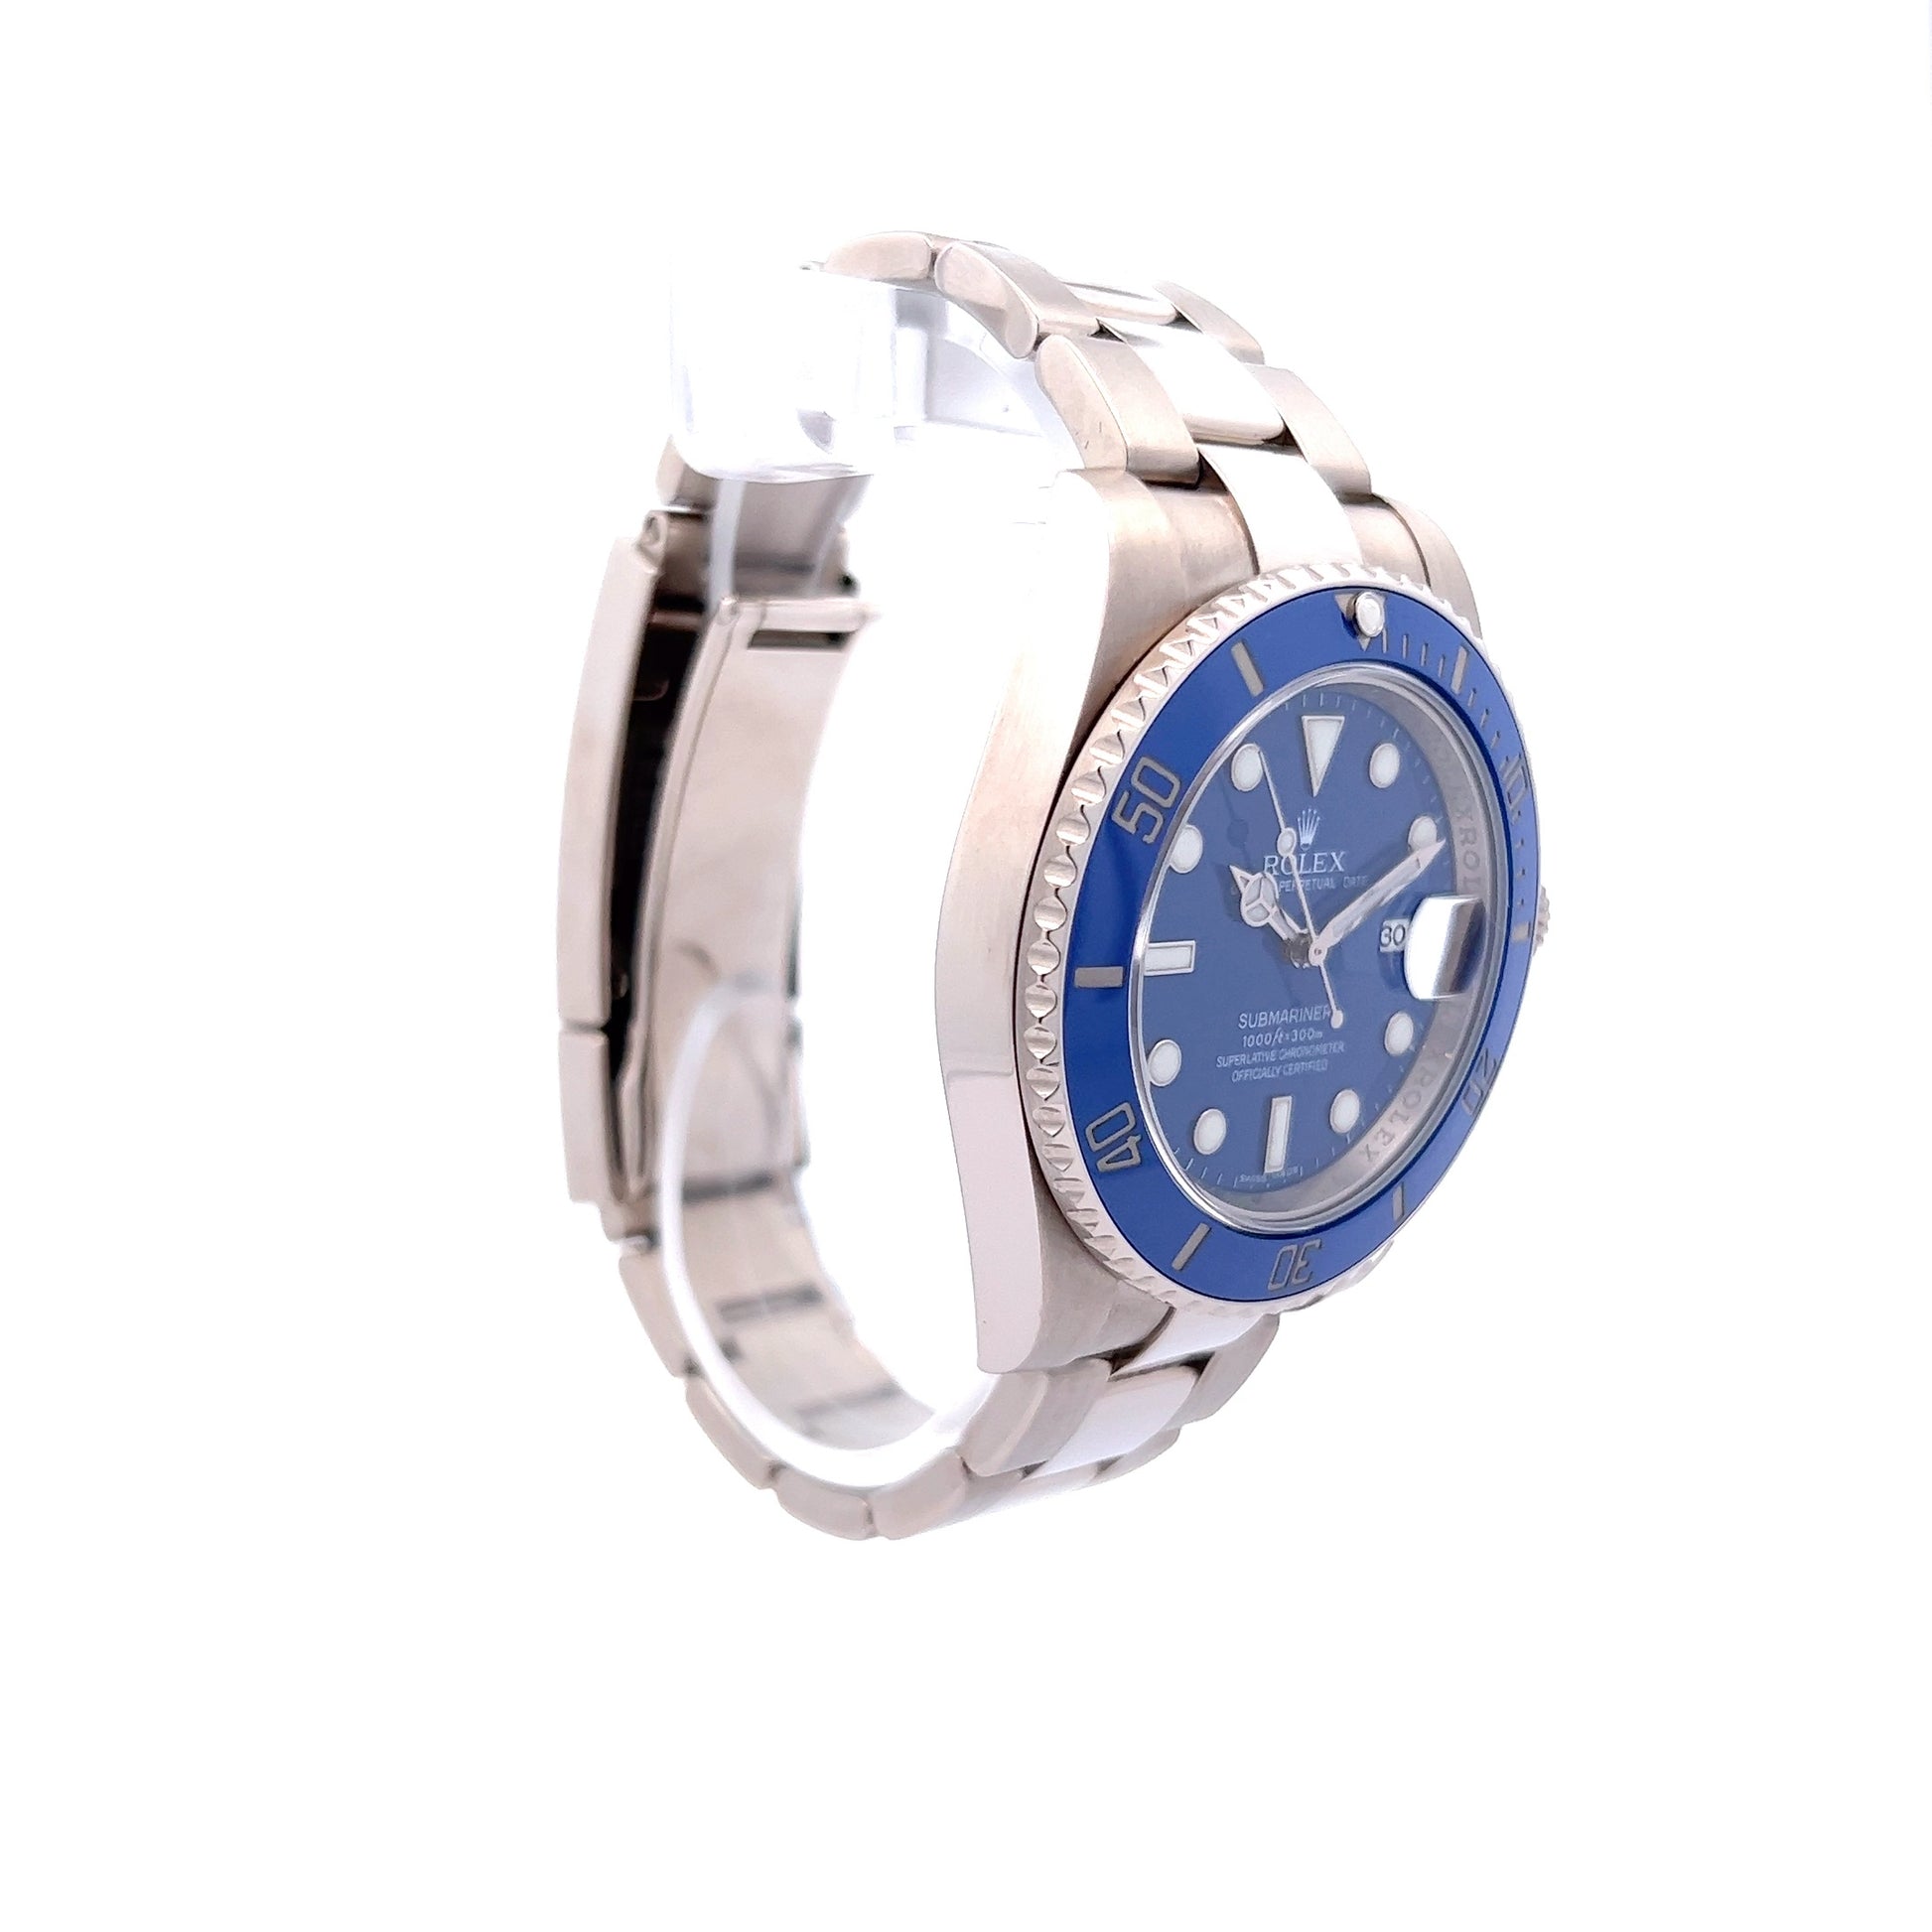 Rolex Emerald Steel Submariner Date / Stainless Watch Dial Modern